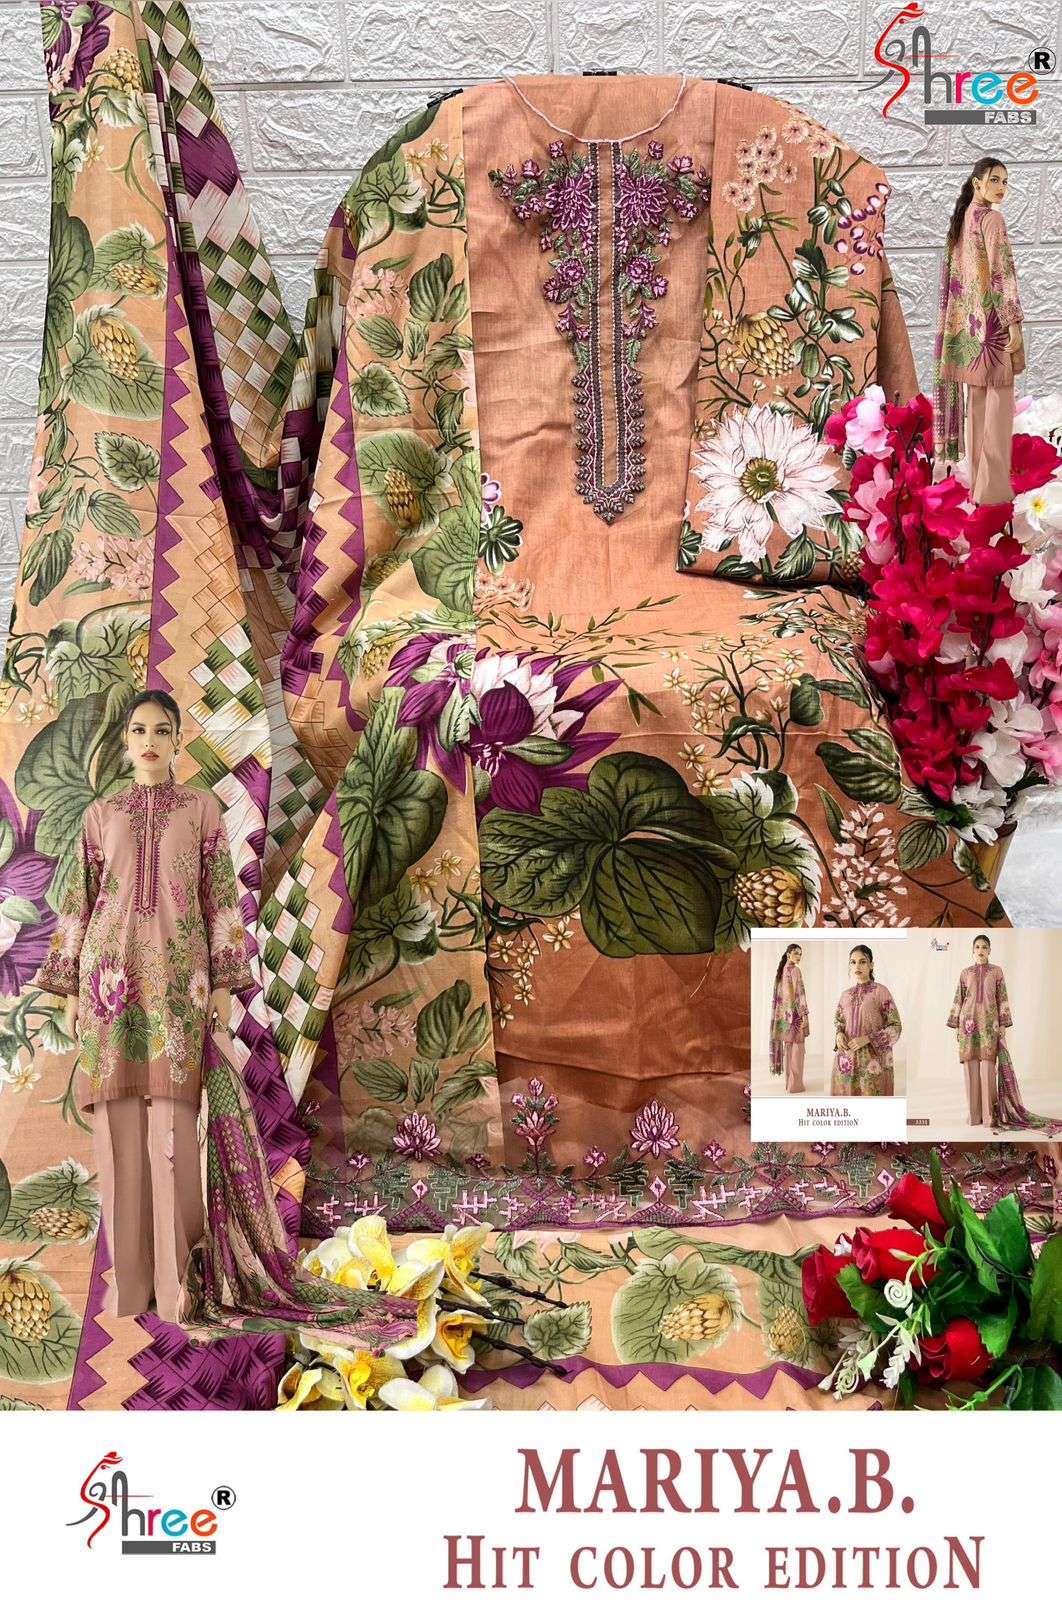 shree fabs maria b 3331 colour series designer wedding wear pakistani suit wholesaler surat gujarat